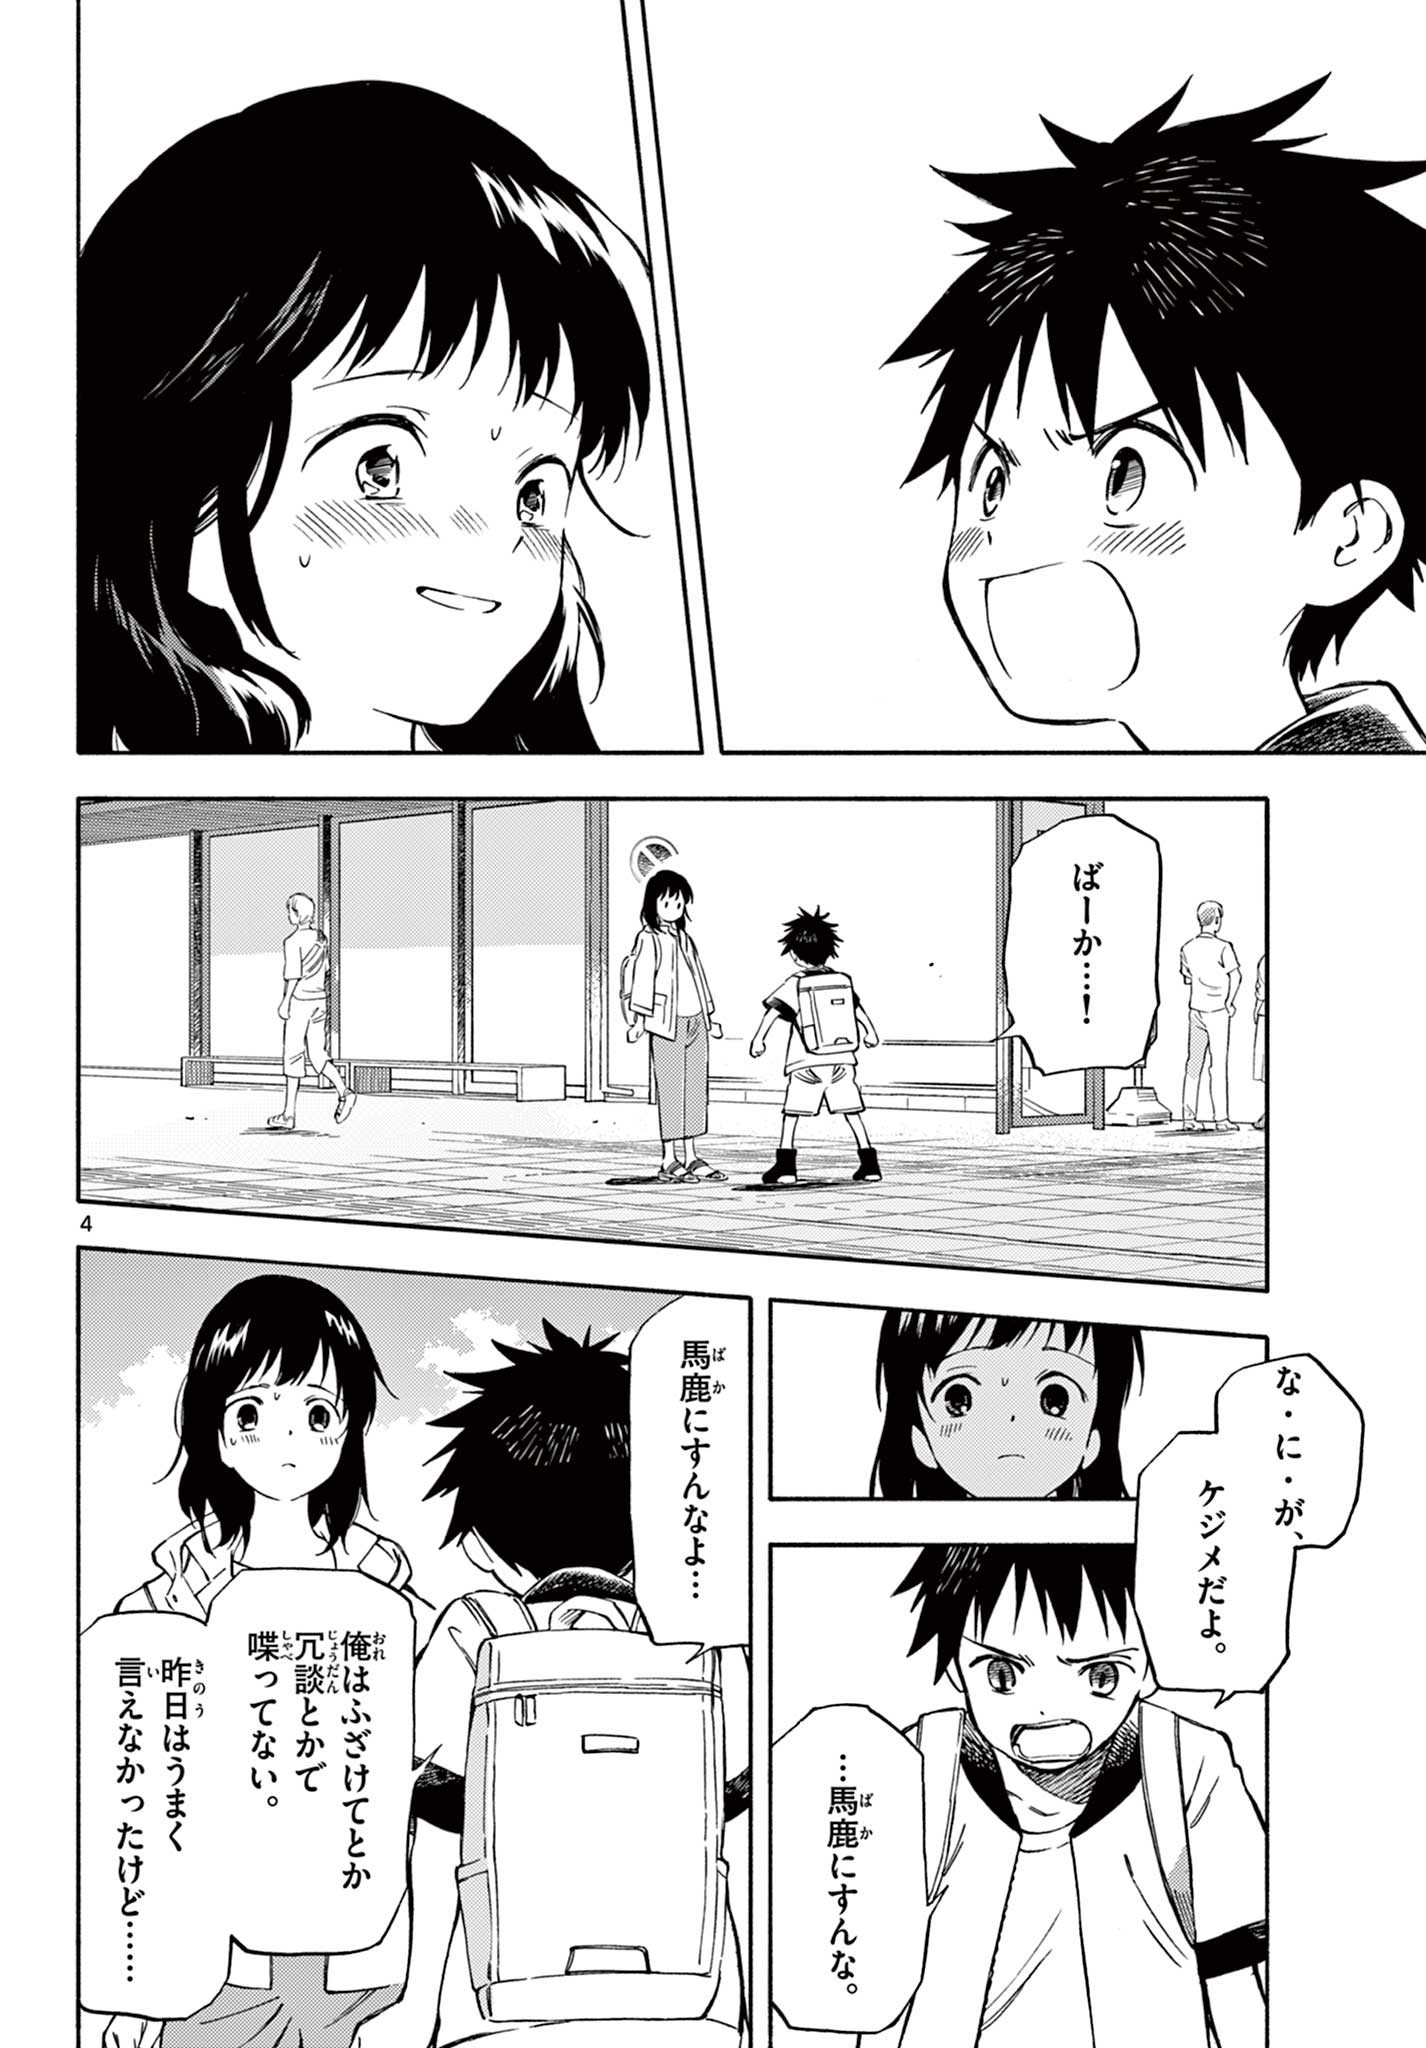 Nami no Shijima no Horizont - Chapter 14.1 - Page 4